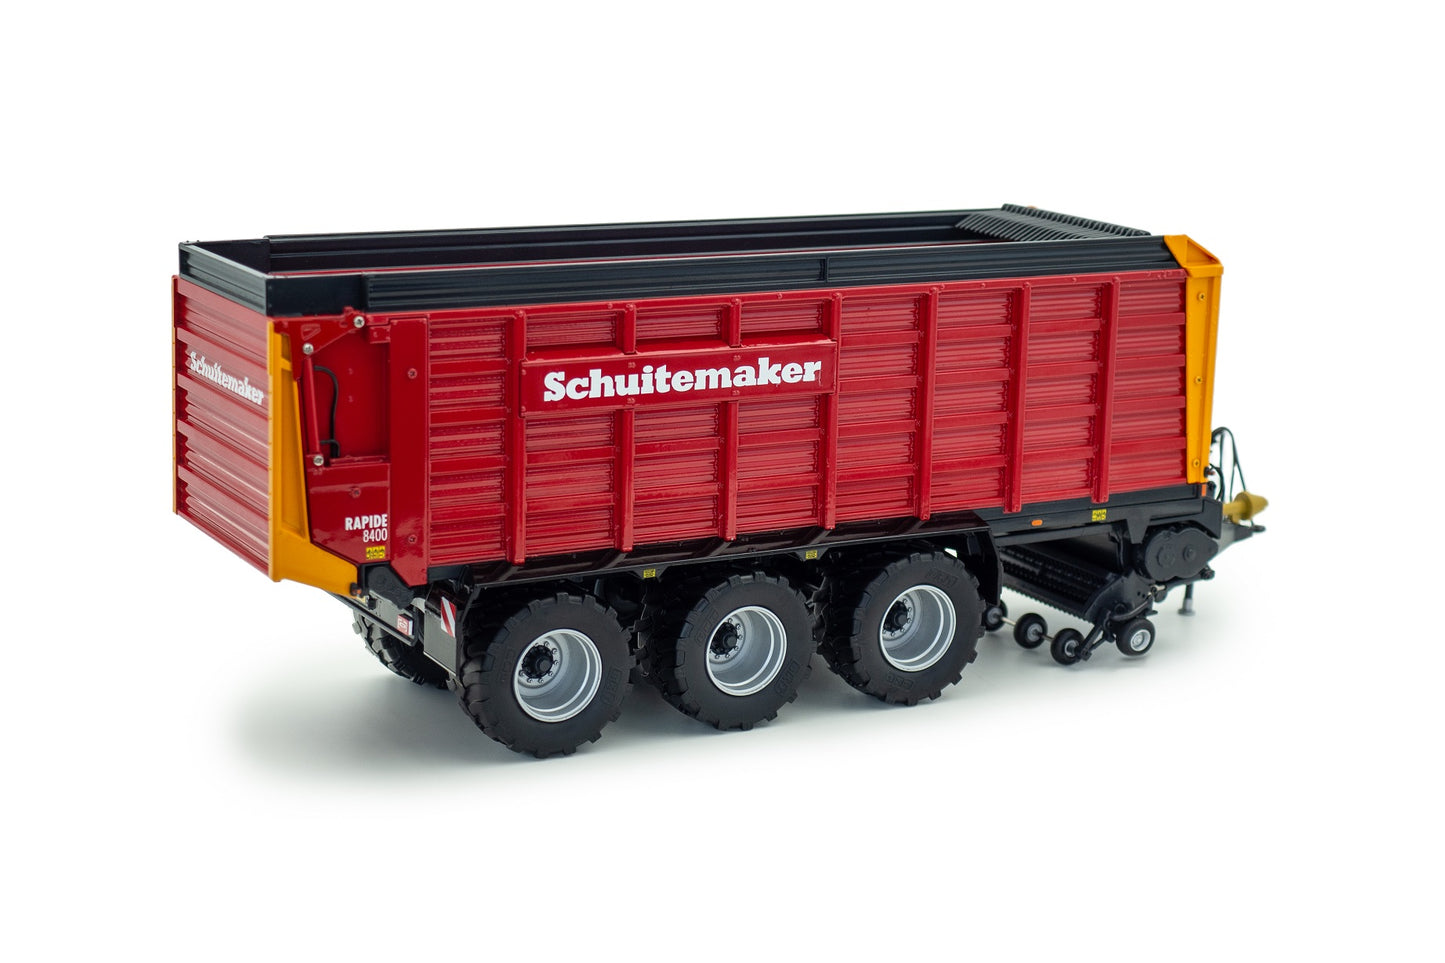 Schuitemaker Rapide 8400 Limited Edition